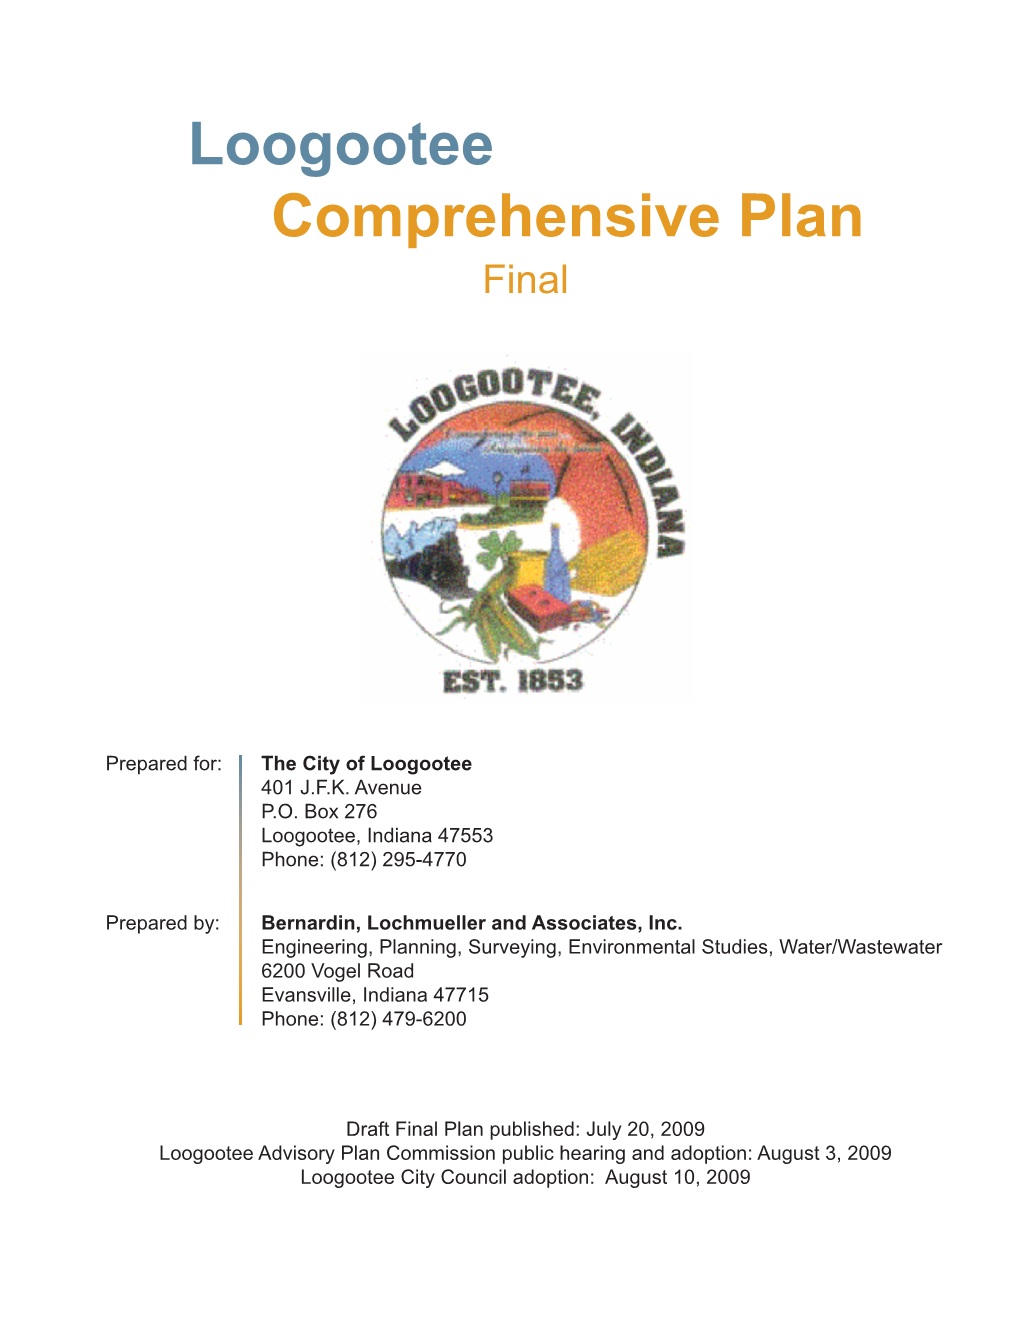 Loogootee Comprehensive Plan.Indd